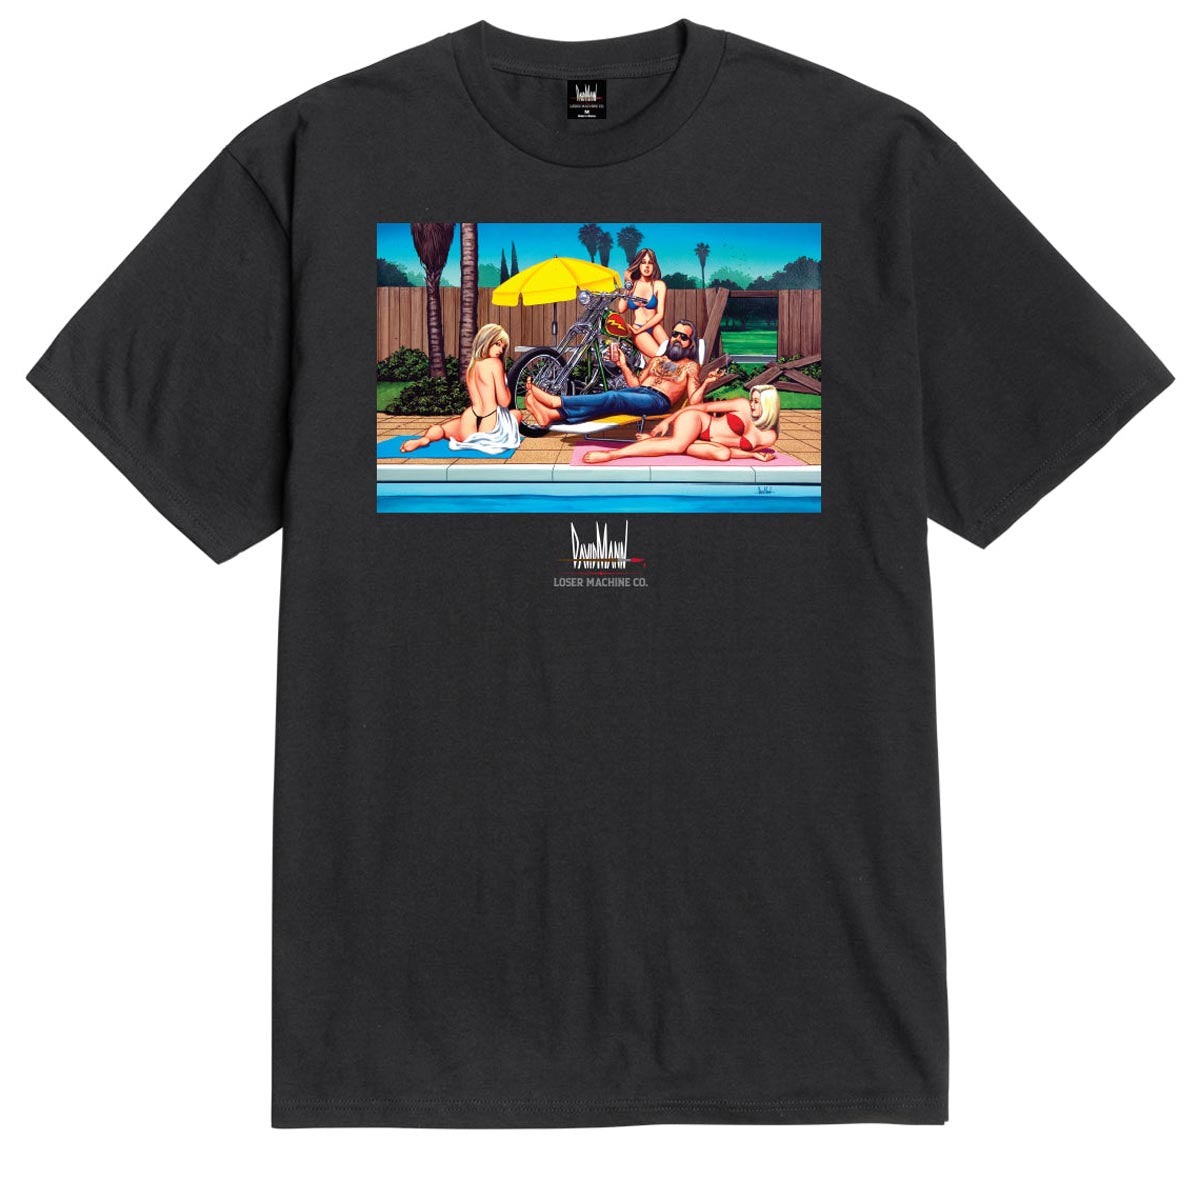 Loser Machine Poolside T-Shirt - Black image 1